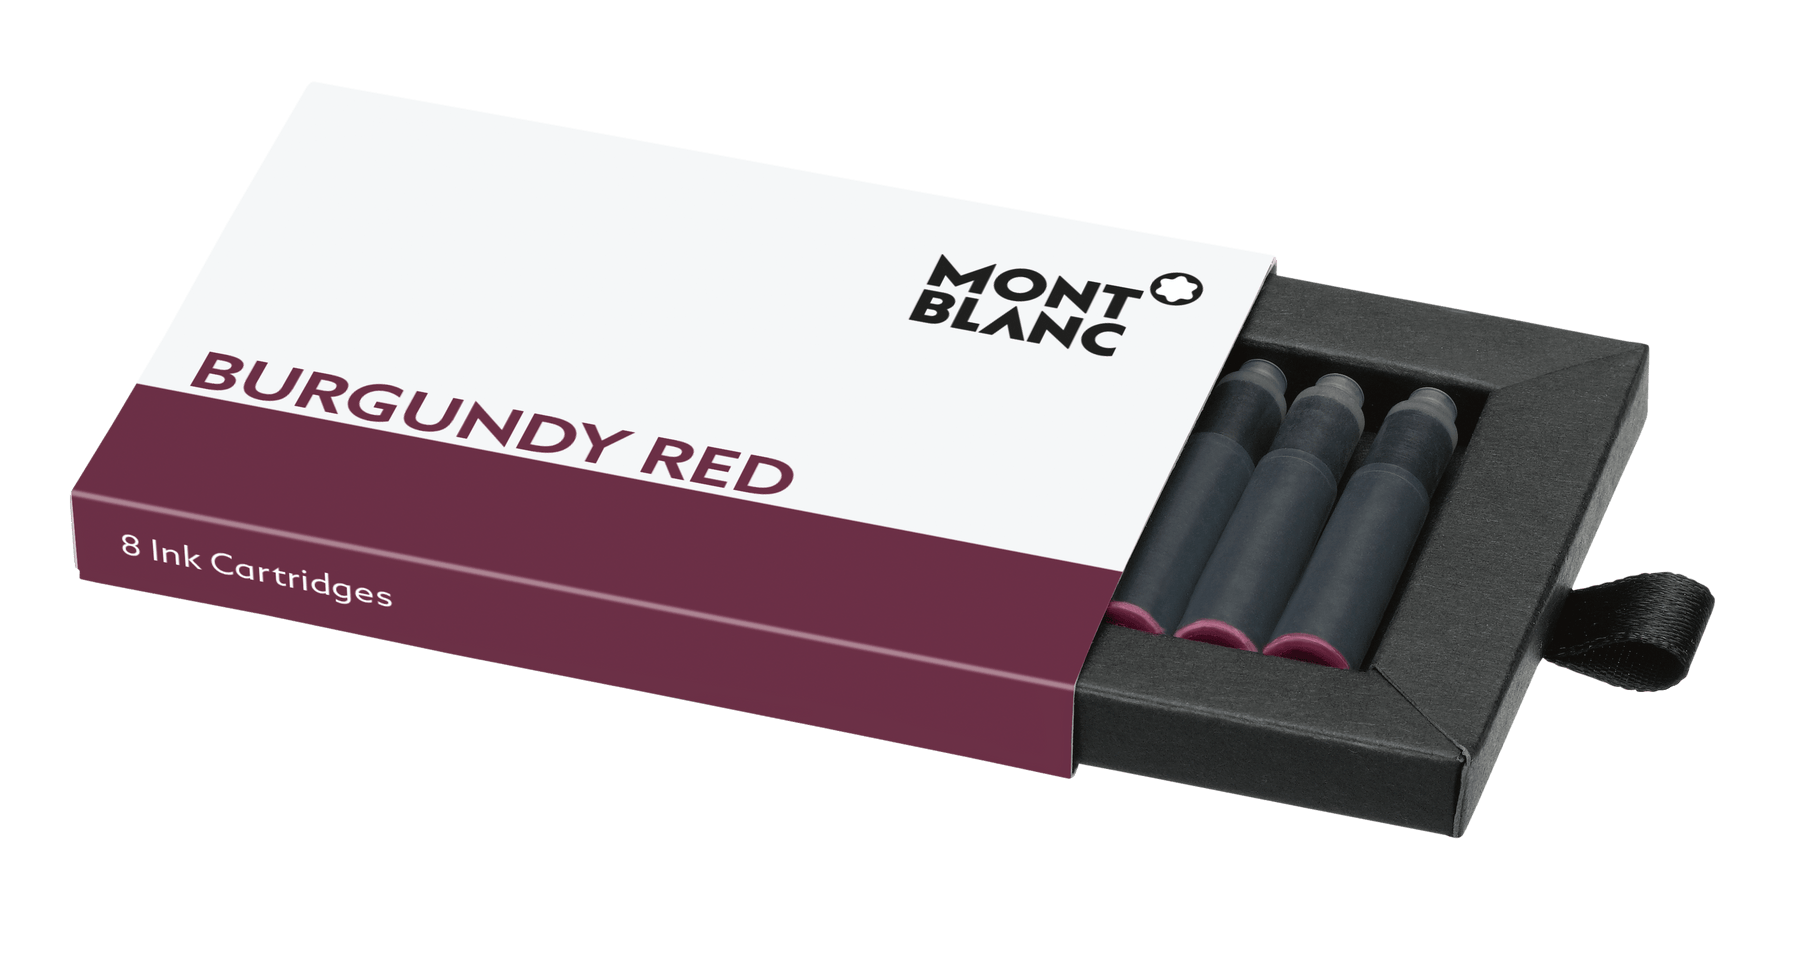 Ink cartridges, burgundy red